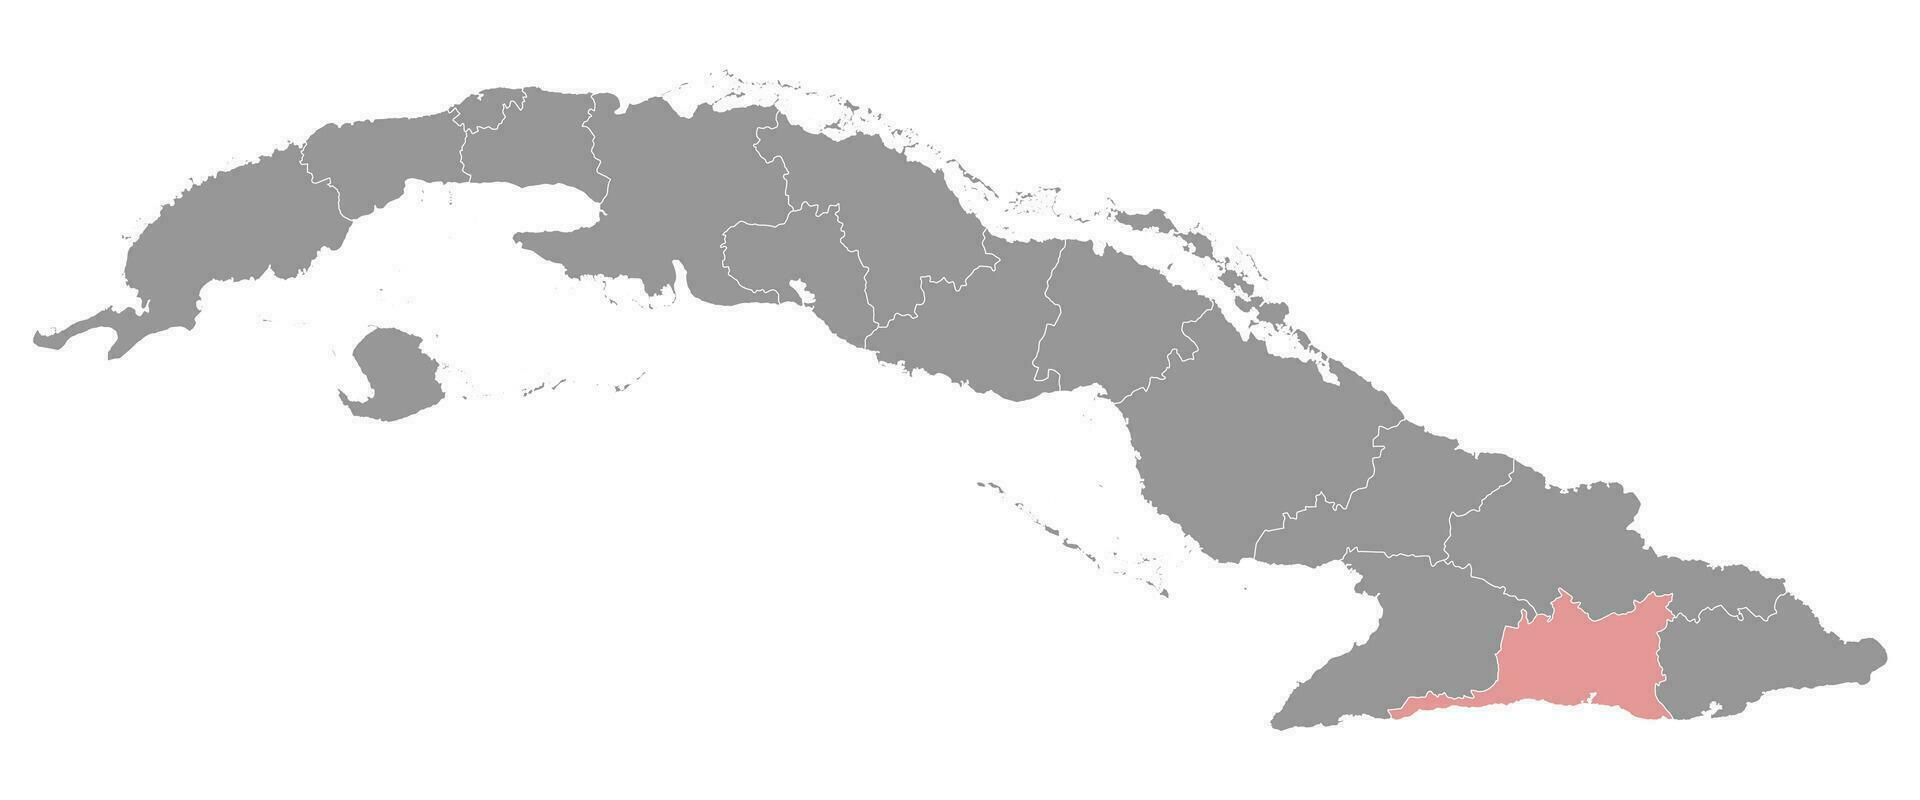 Santiago de Kuba Provinz Karte, administrative Aufteilung von Kuba. Vektor Illustration.